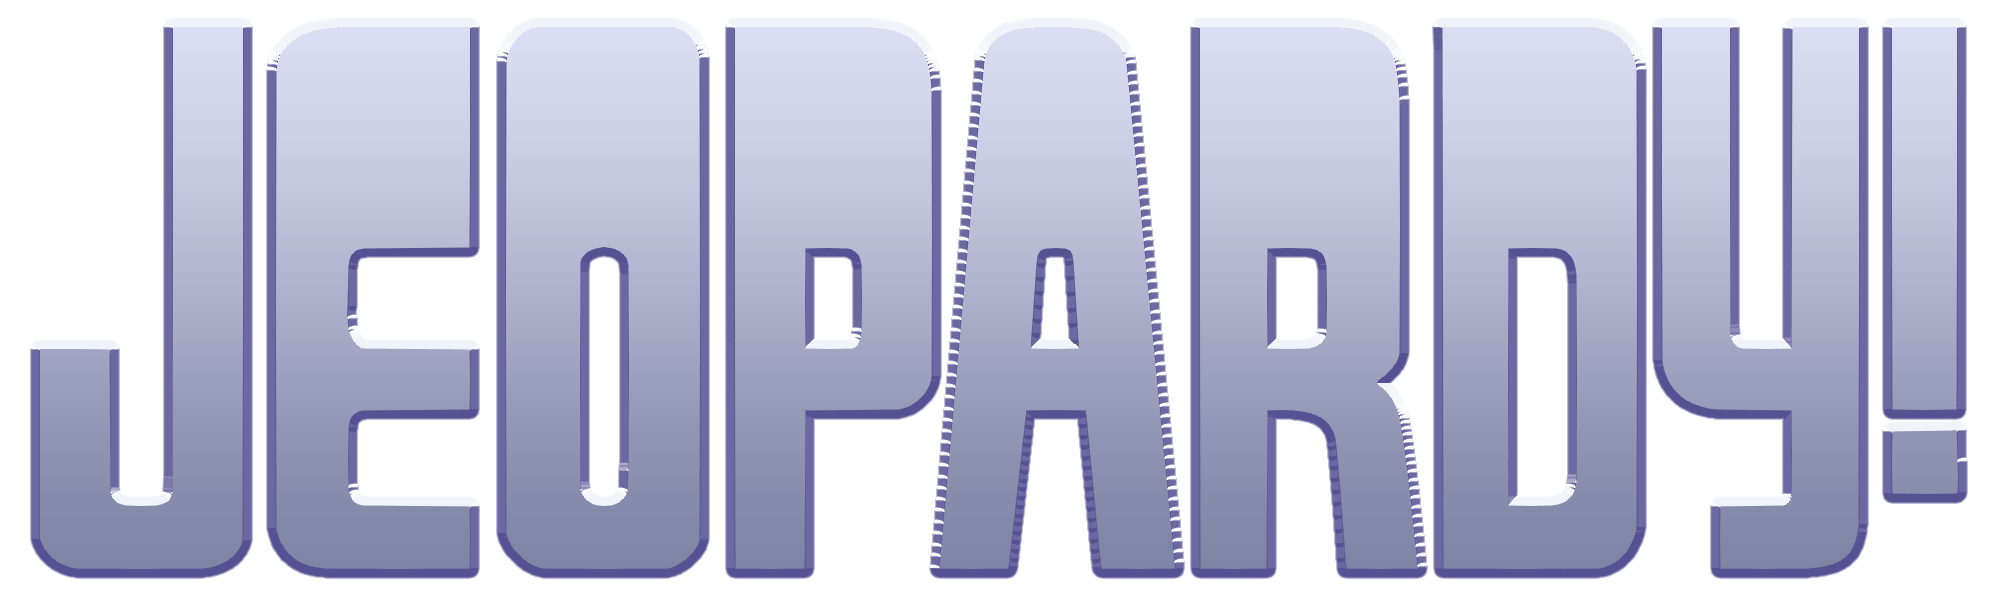 Jepardy Logo - Jeopardy PNG Transparent Jeopardy PNG Image